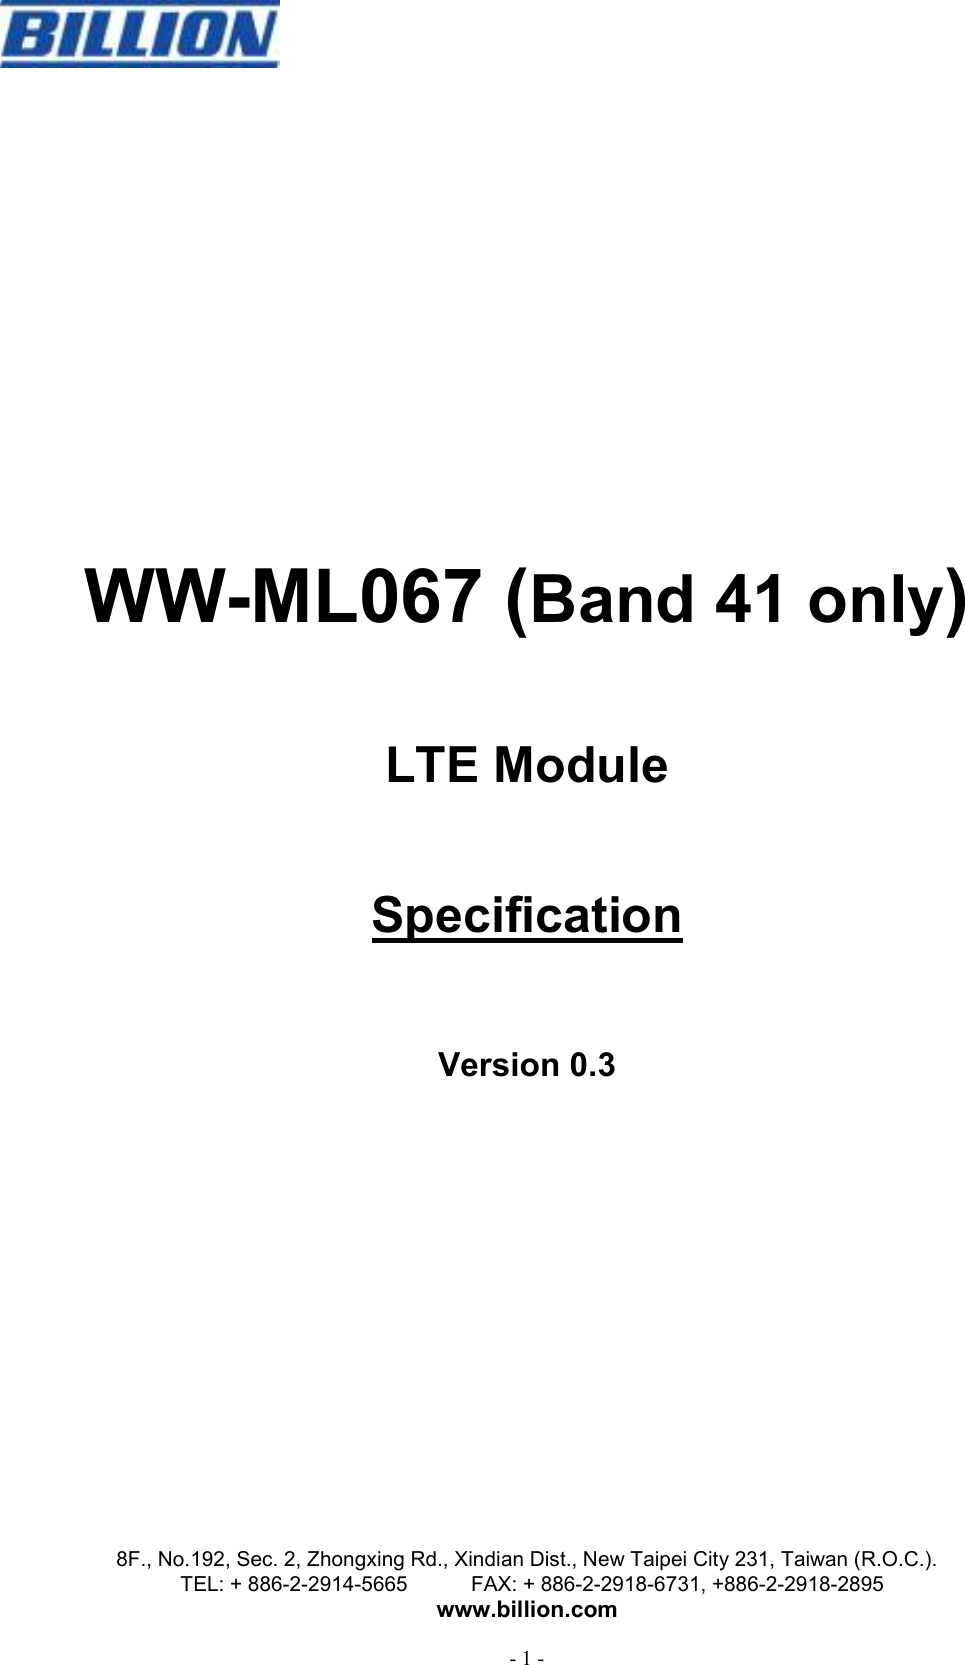   8F., No.192, Sec. 2, Zhongxing Rd., Xindian Dist., New Taipei City 231, Taiwan (R.O.C.). TEL: + 886-2-2914-5665            FAX: + 886-2-2918-6731, +886-2-2918-2895 www.billion.com  - 1 -      WW-ML067 (Band 41 only)  LTE Module  Specification  Version 0.3 